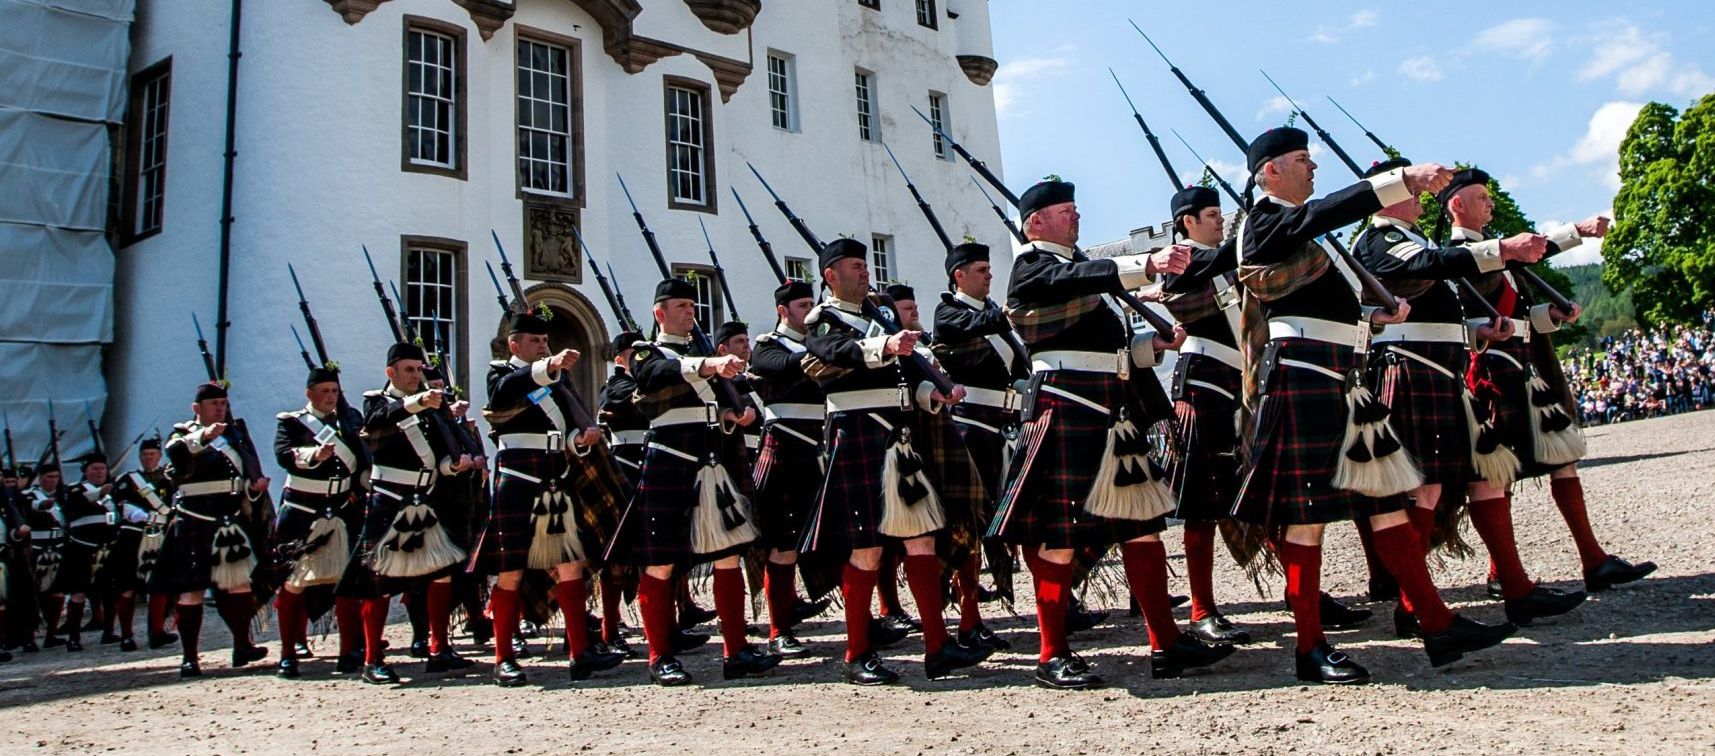 The Atholl Highlanders on Parade